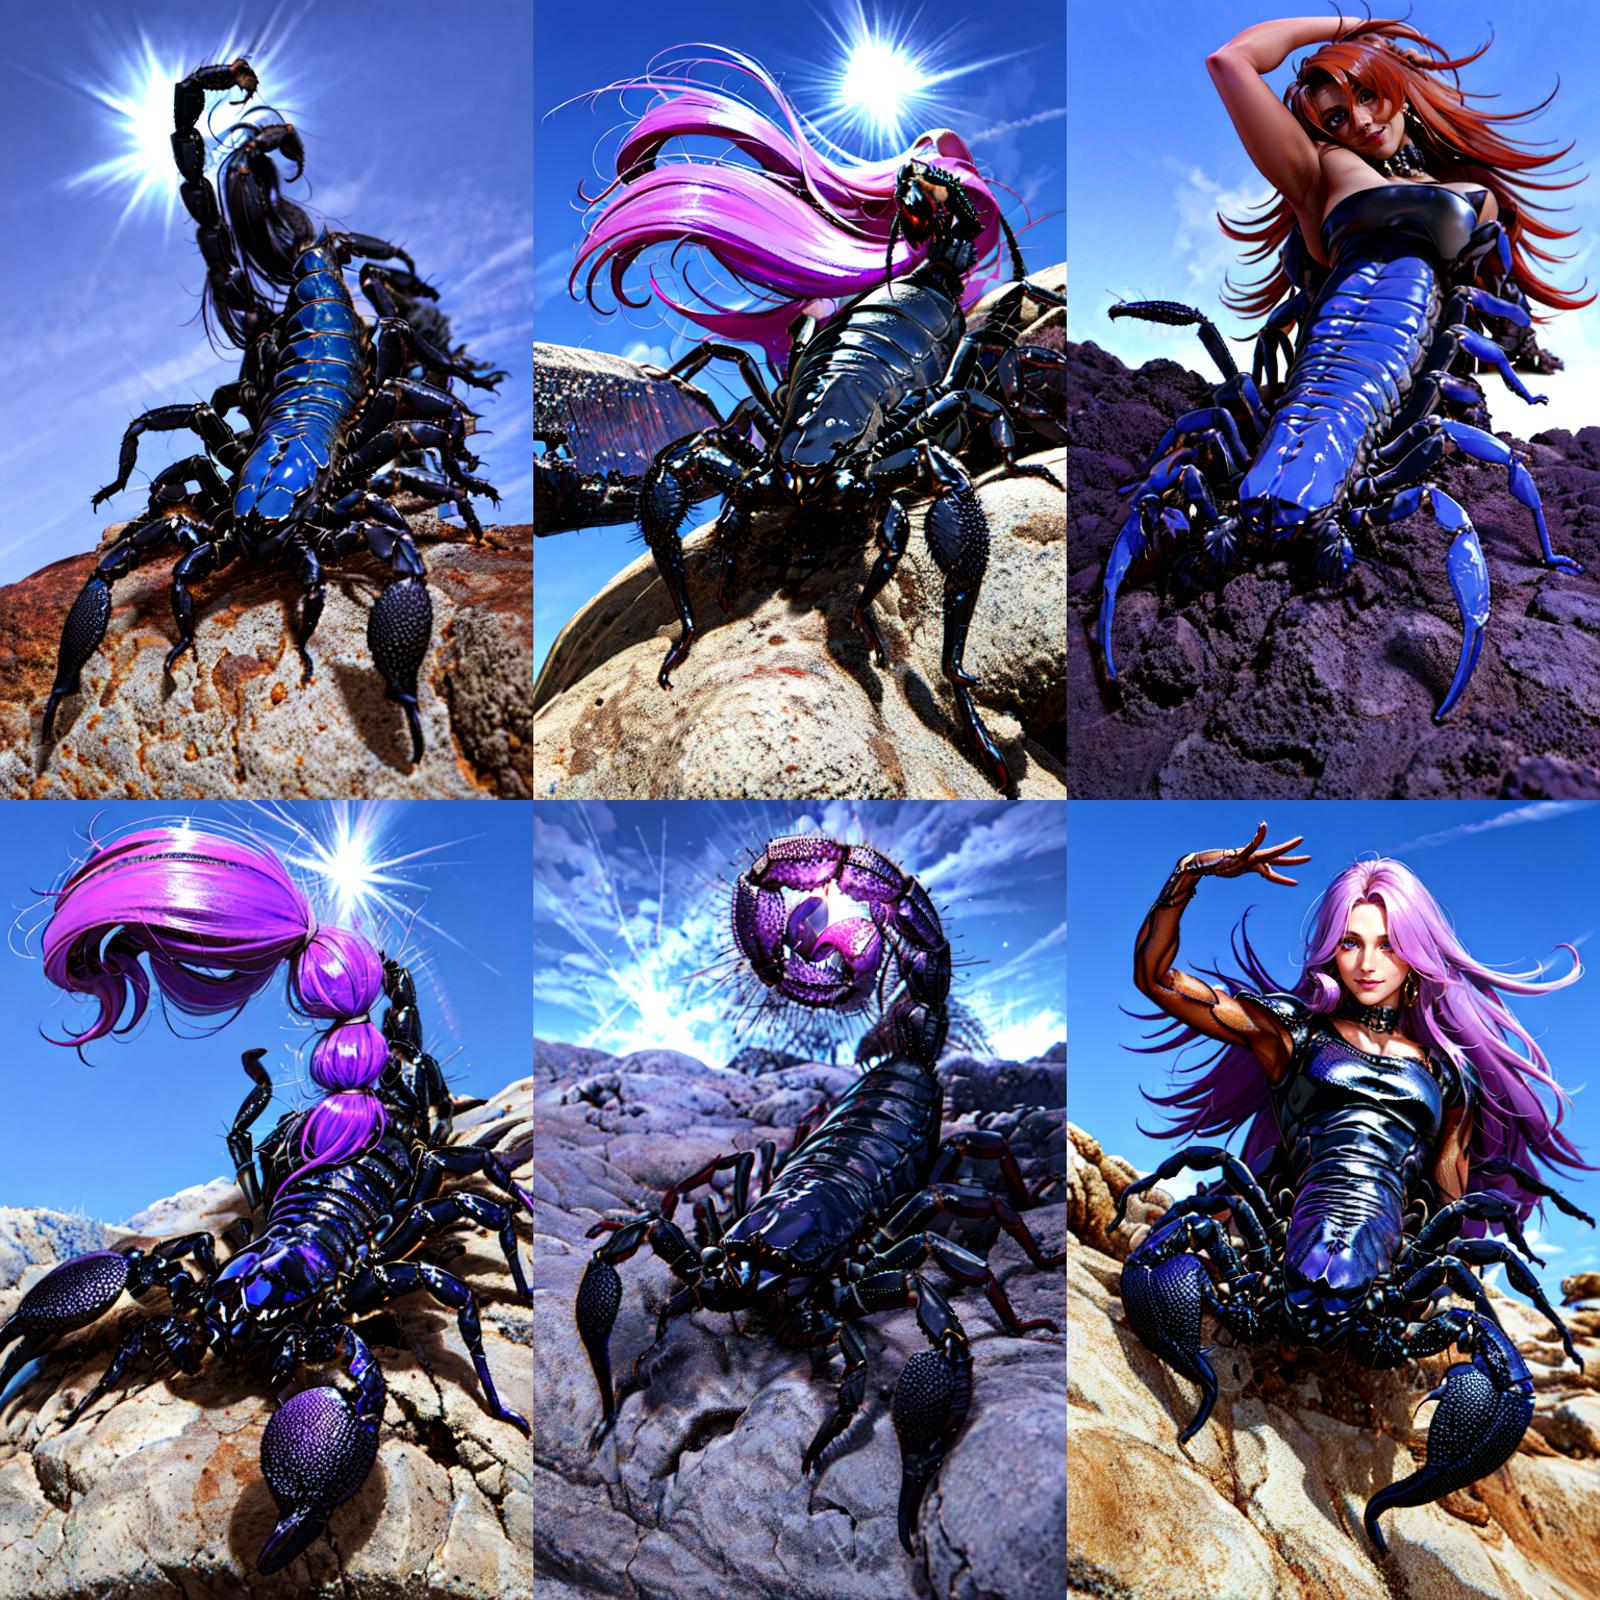 Edob Scorpion image by bluelovers